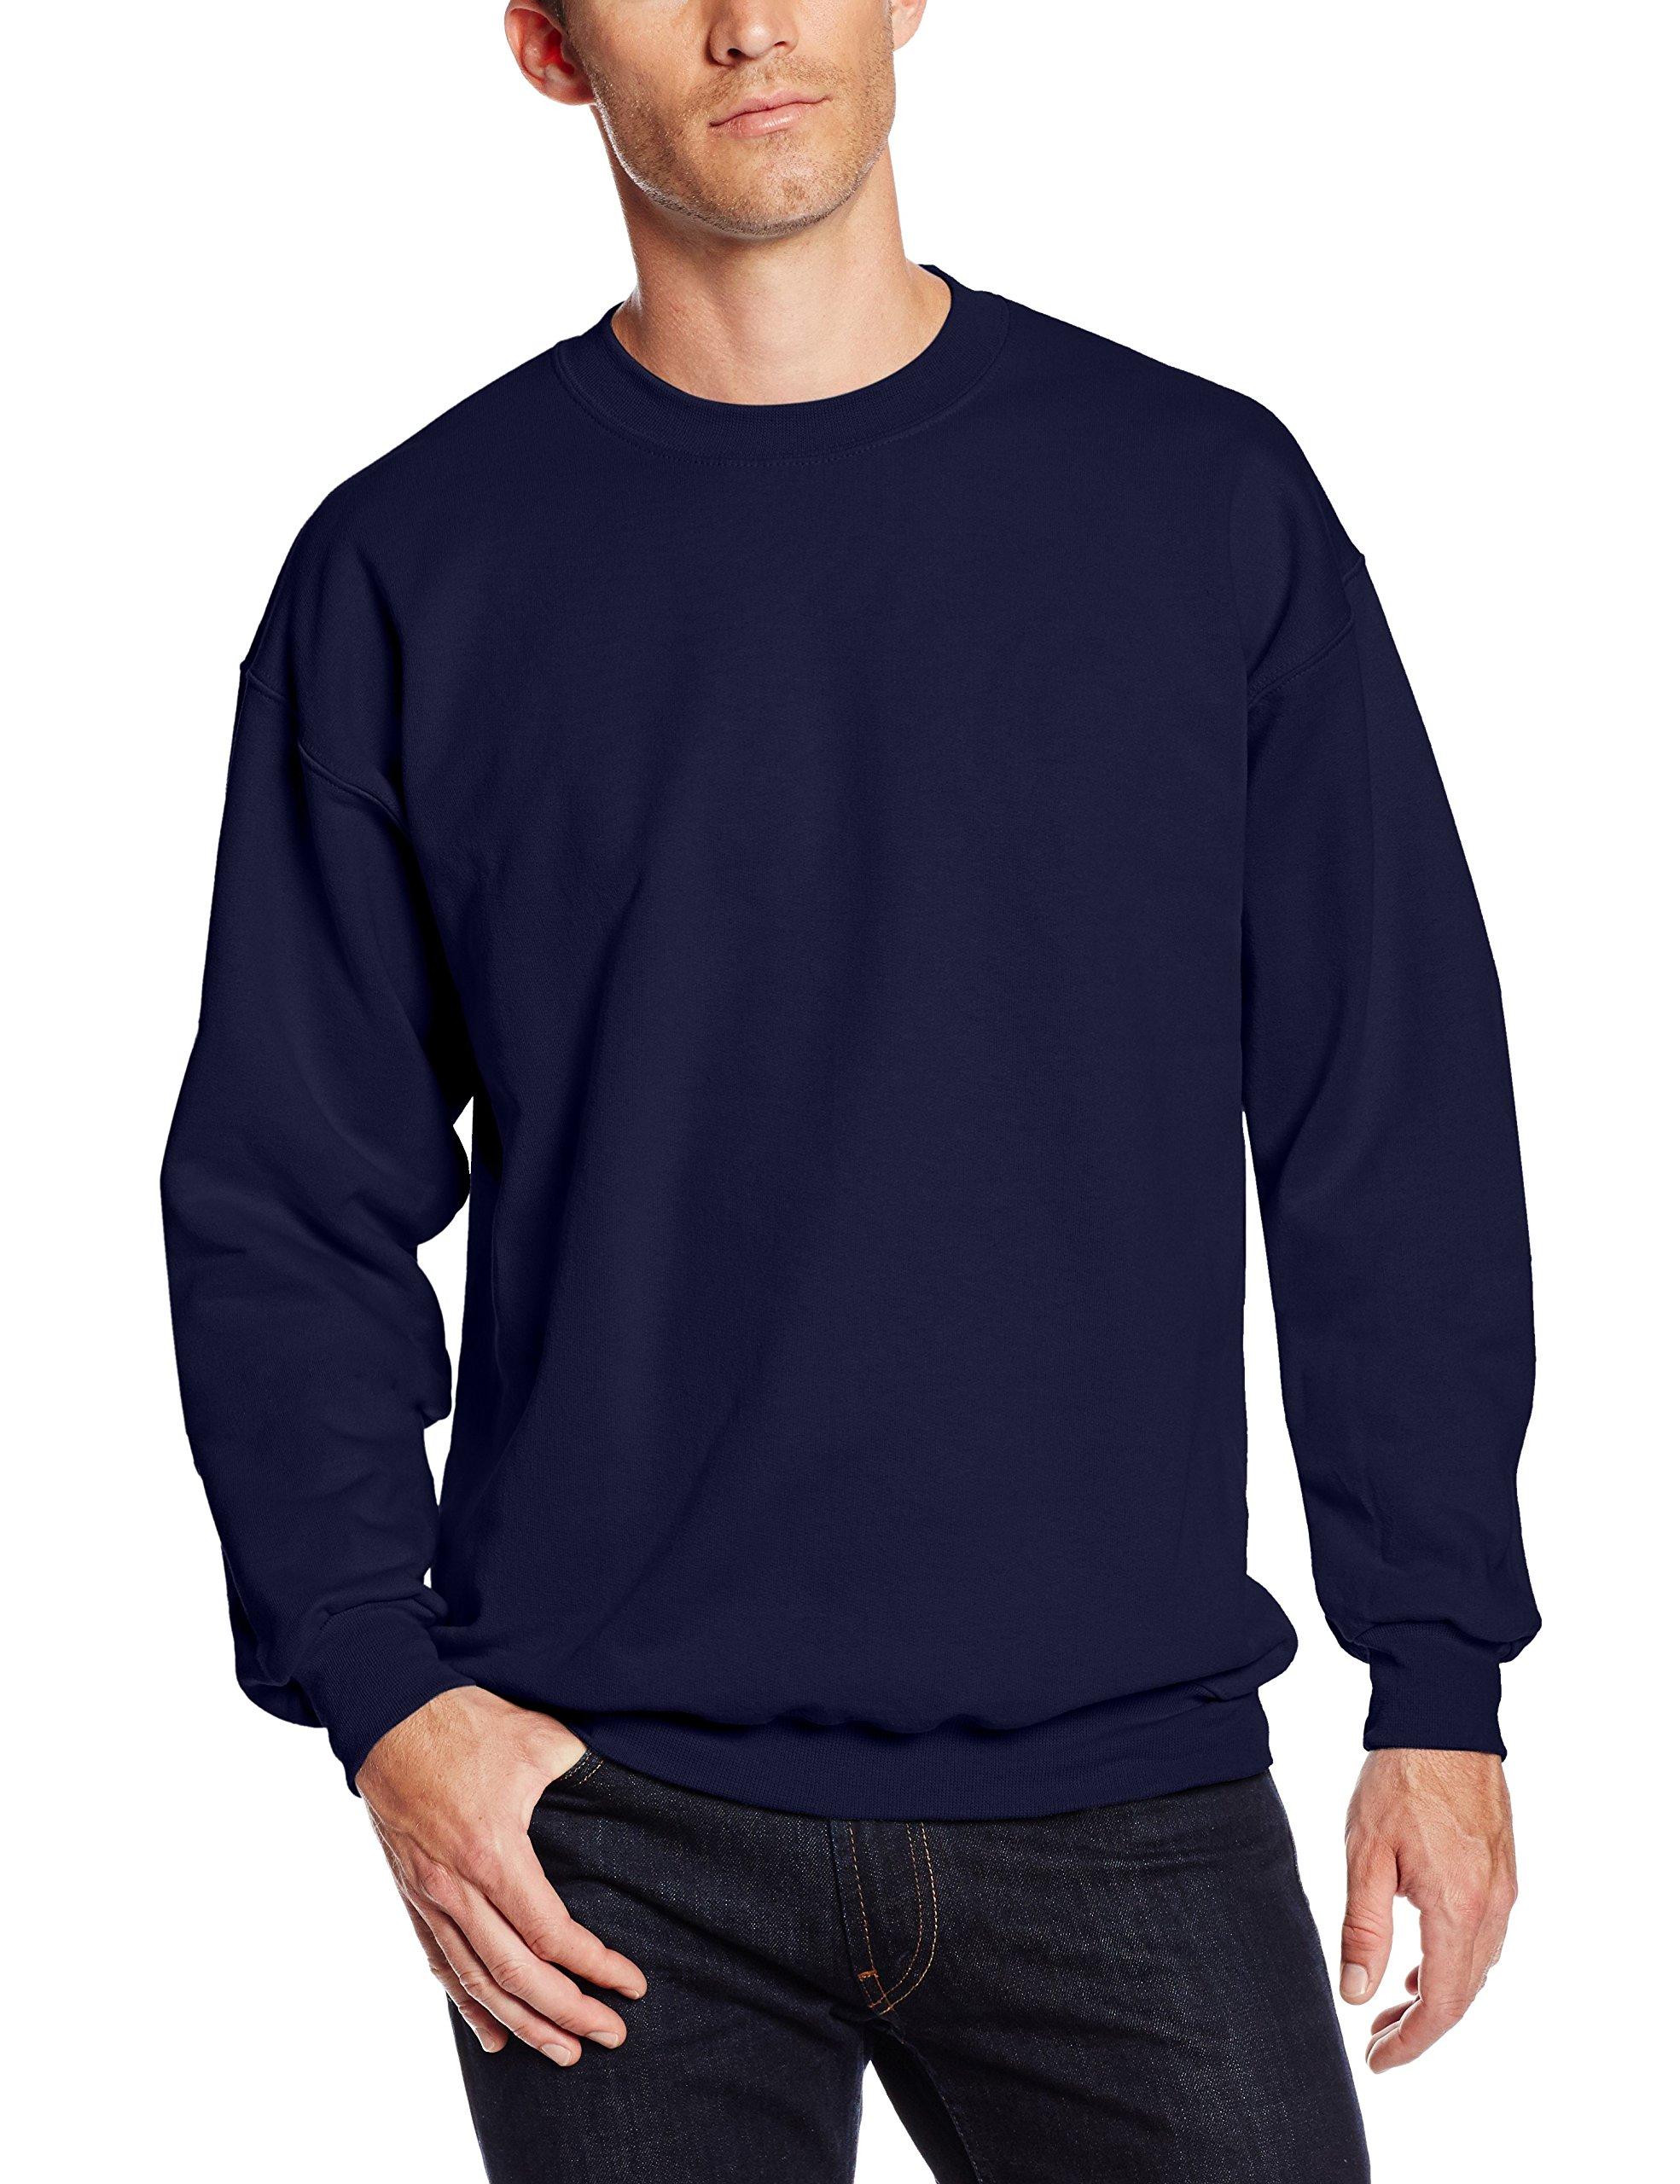 Hanes Cotton Ultimate Heavyweight Fleece Sweatshirt in Navy (Blue) for ...